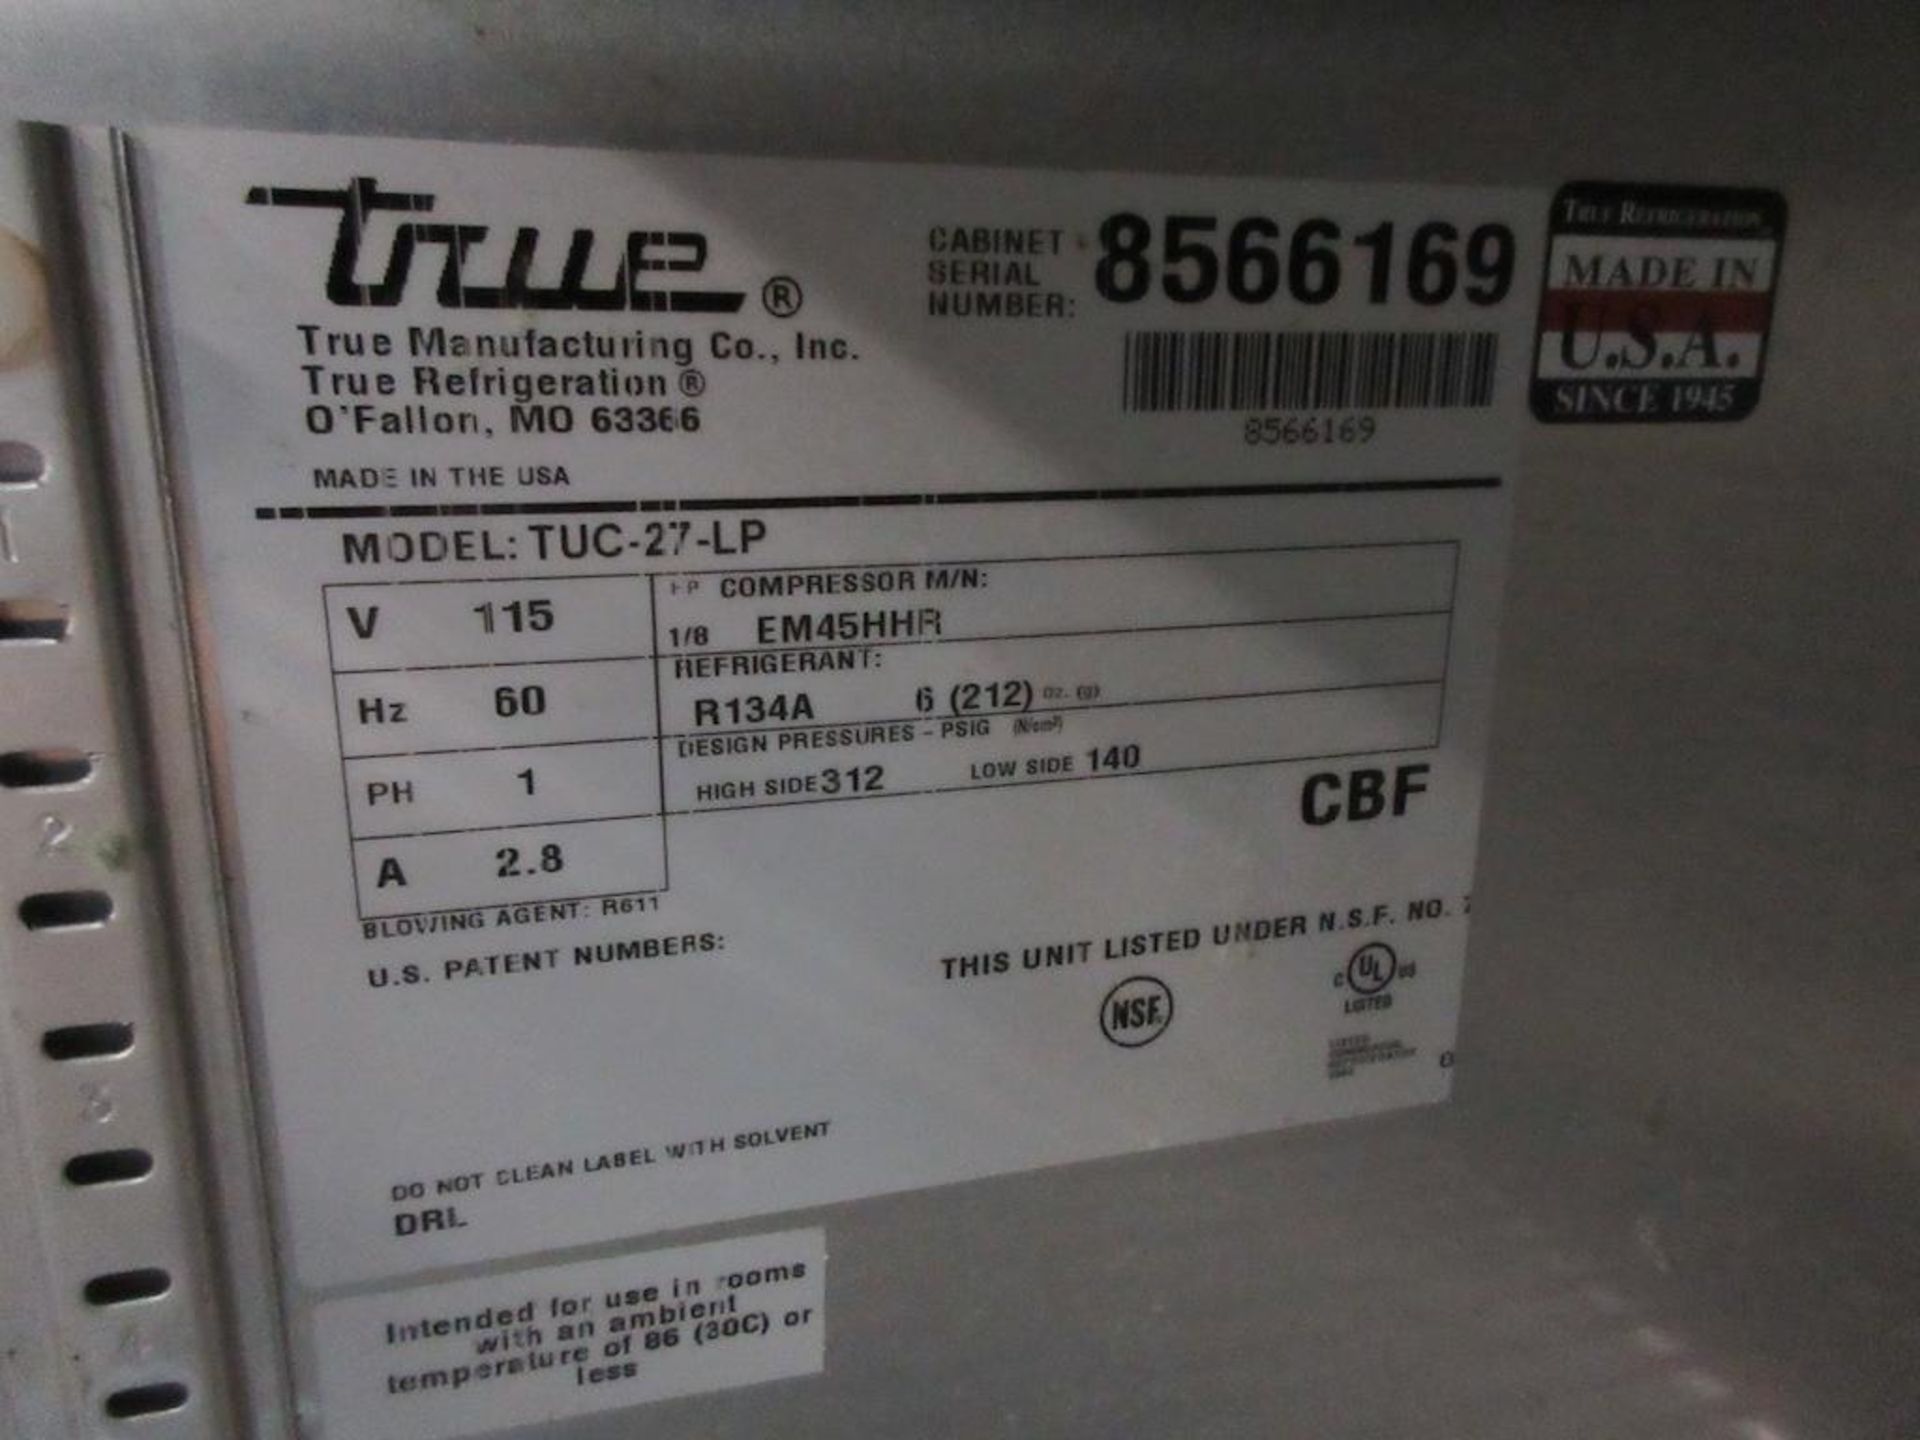 True model T4C-27-LP portable 1 door reach in undercounter refrigerator, sn 8566169 - Image 3 of 3